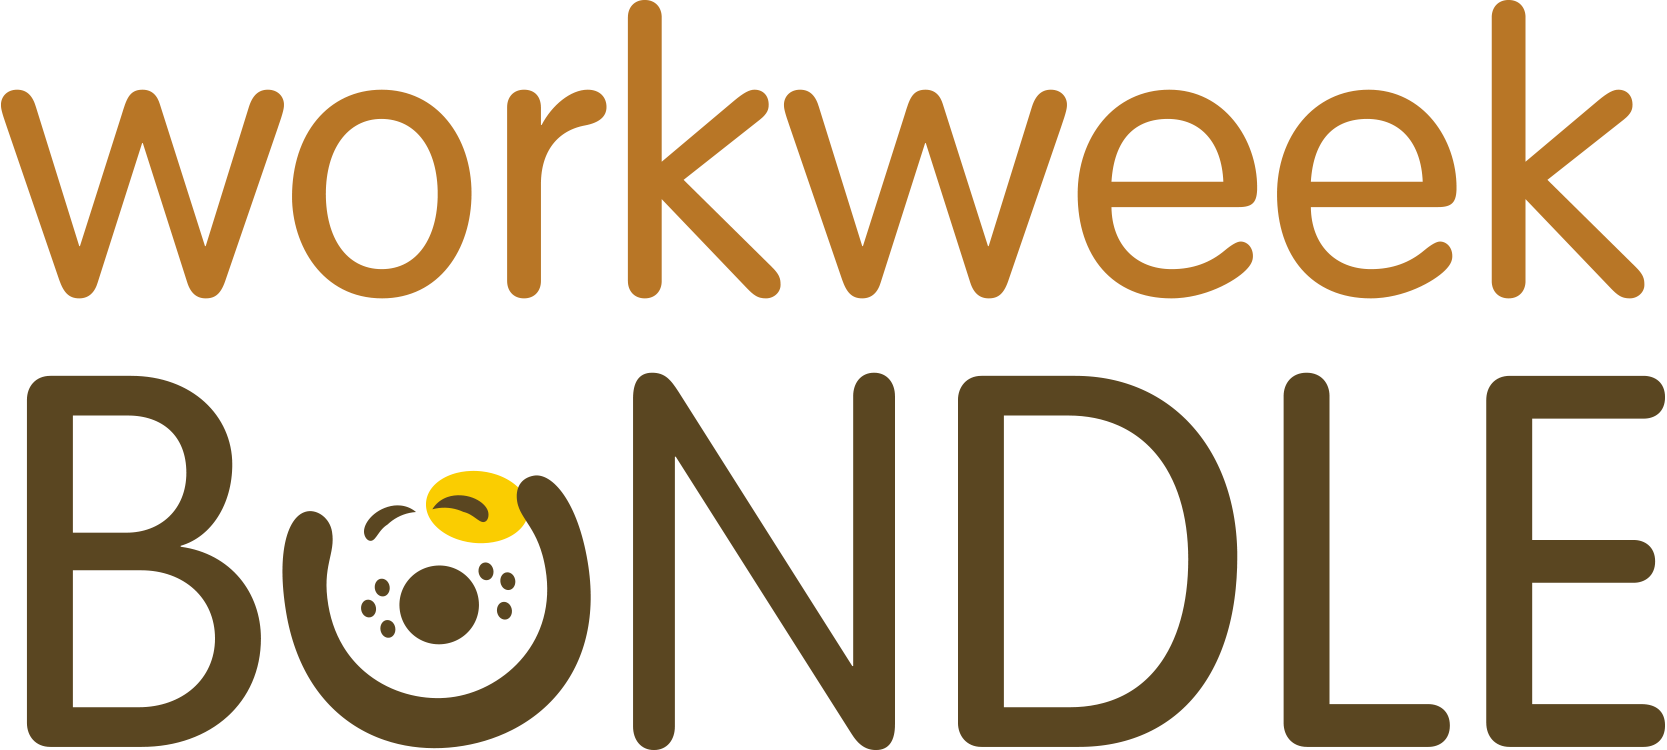 Furtastic Nanny Workweek Bundle logo